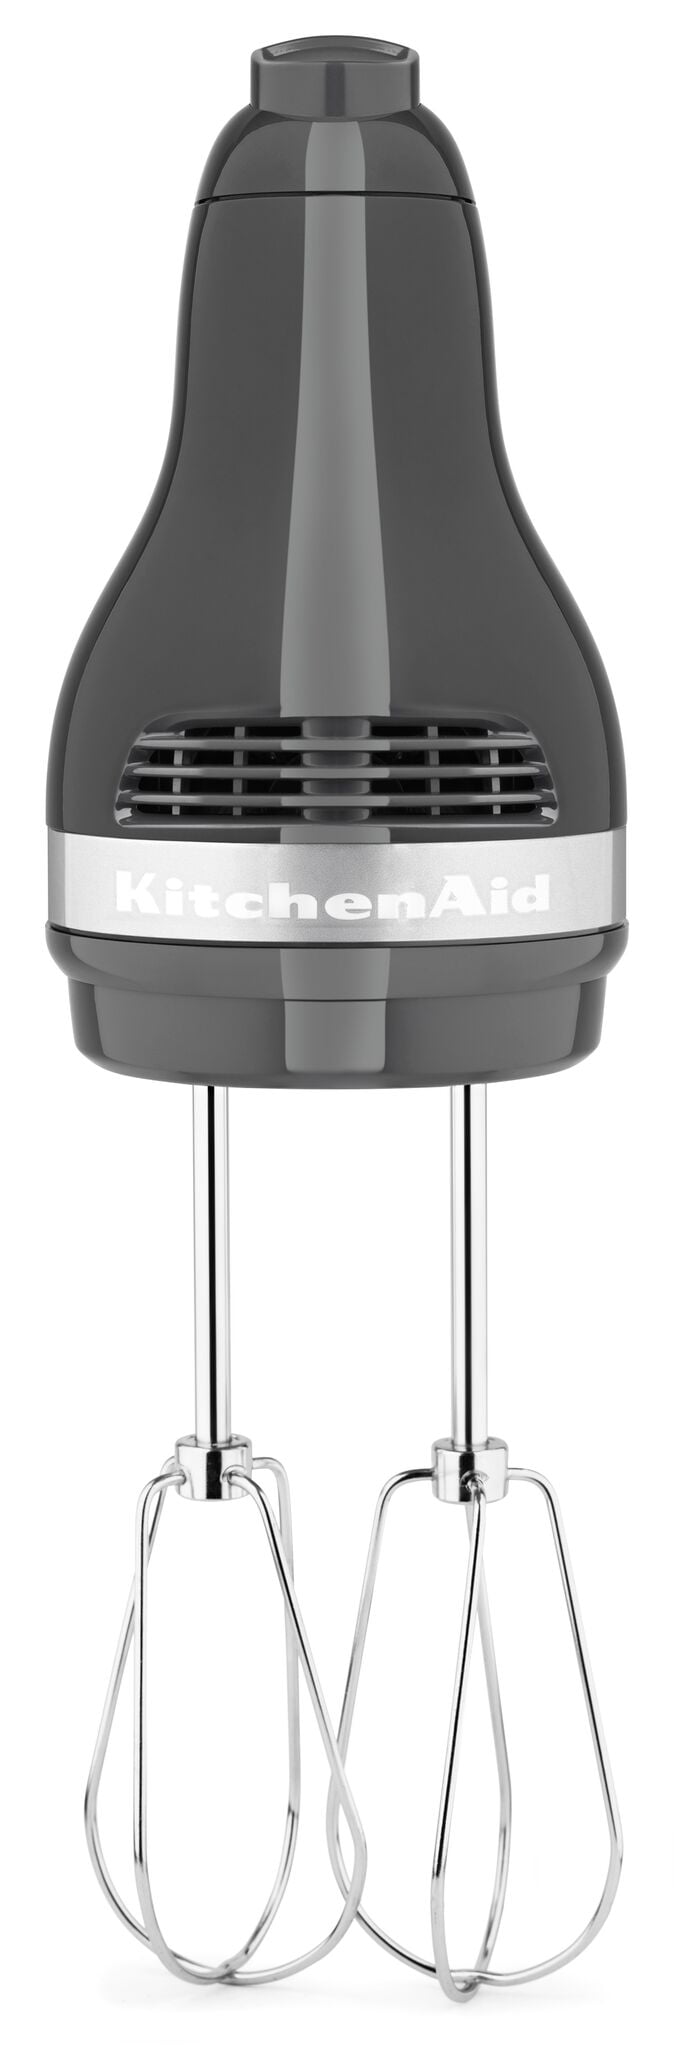 KitchenAid KHM5DH 5-Speed Ultra Power Hand Mixer White